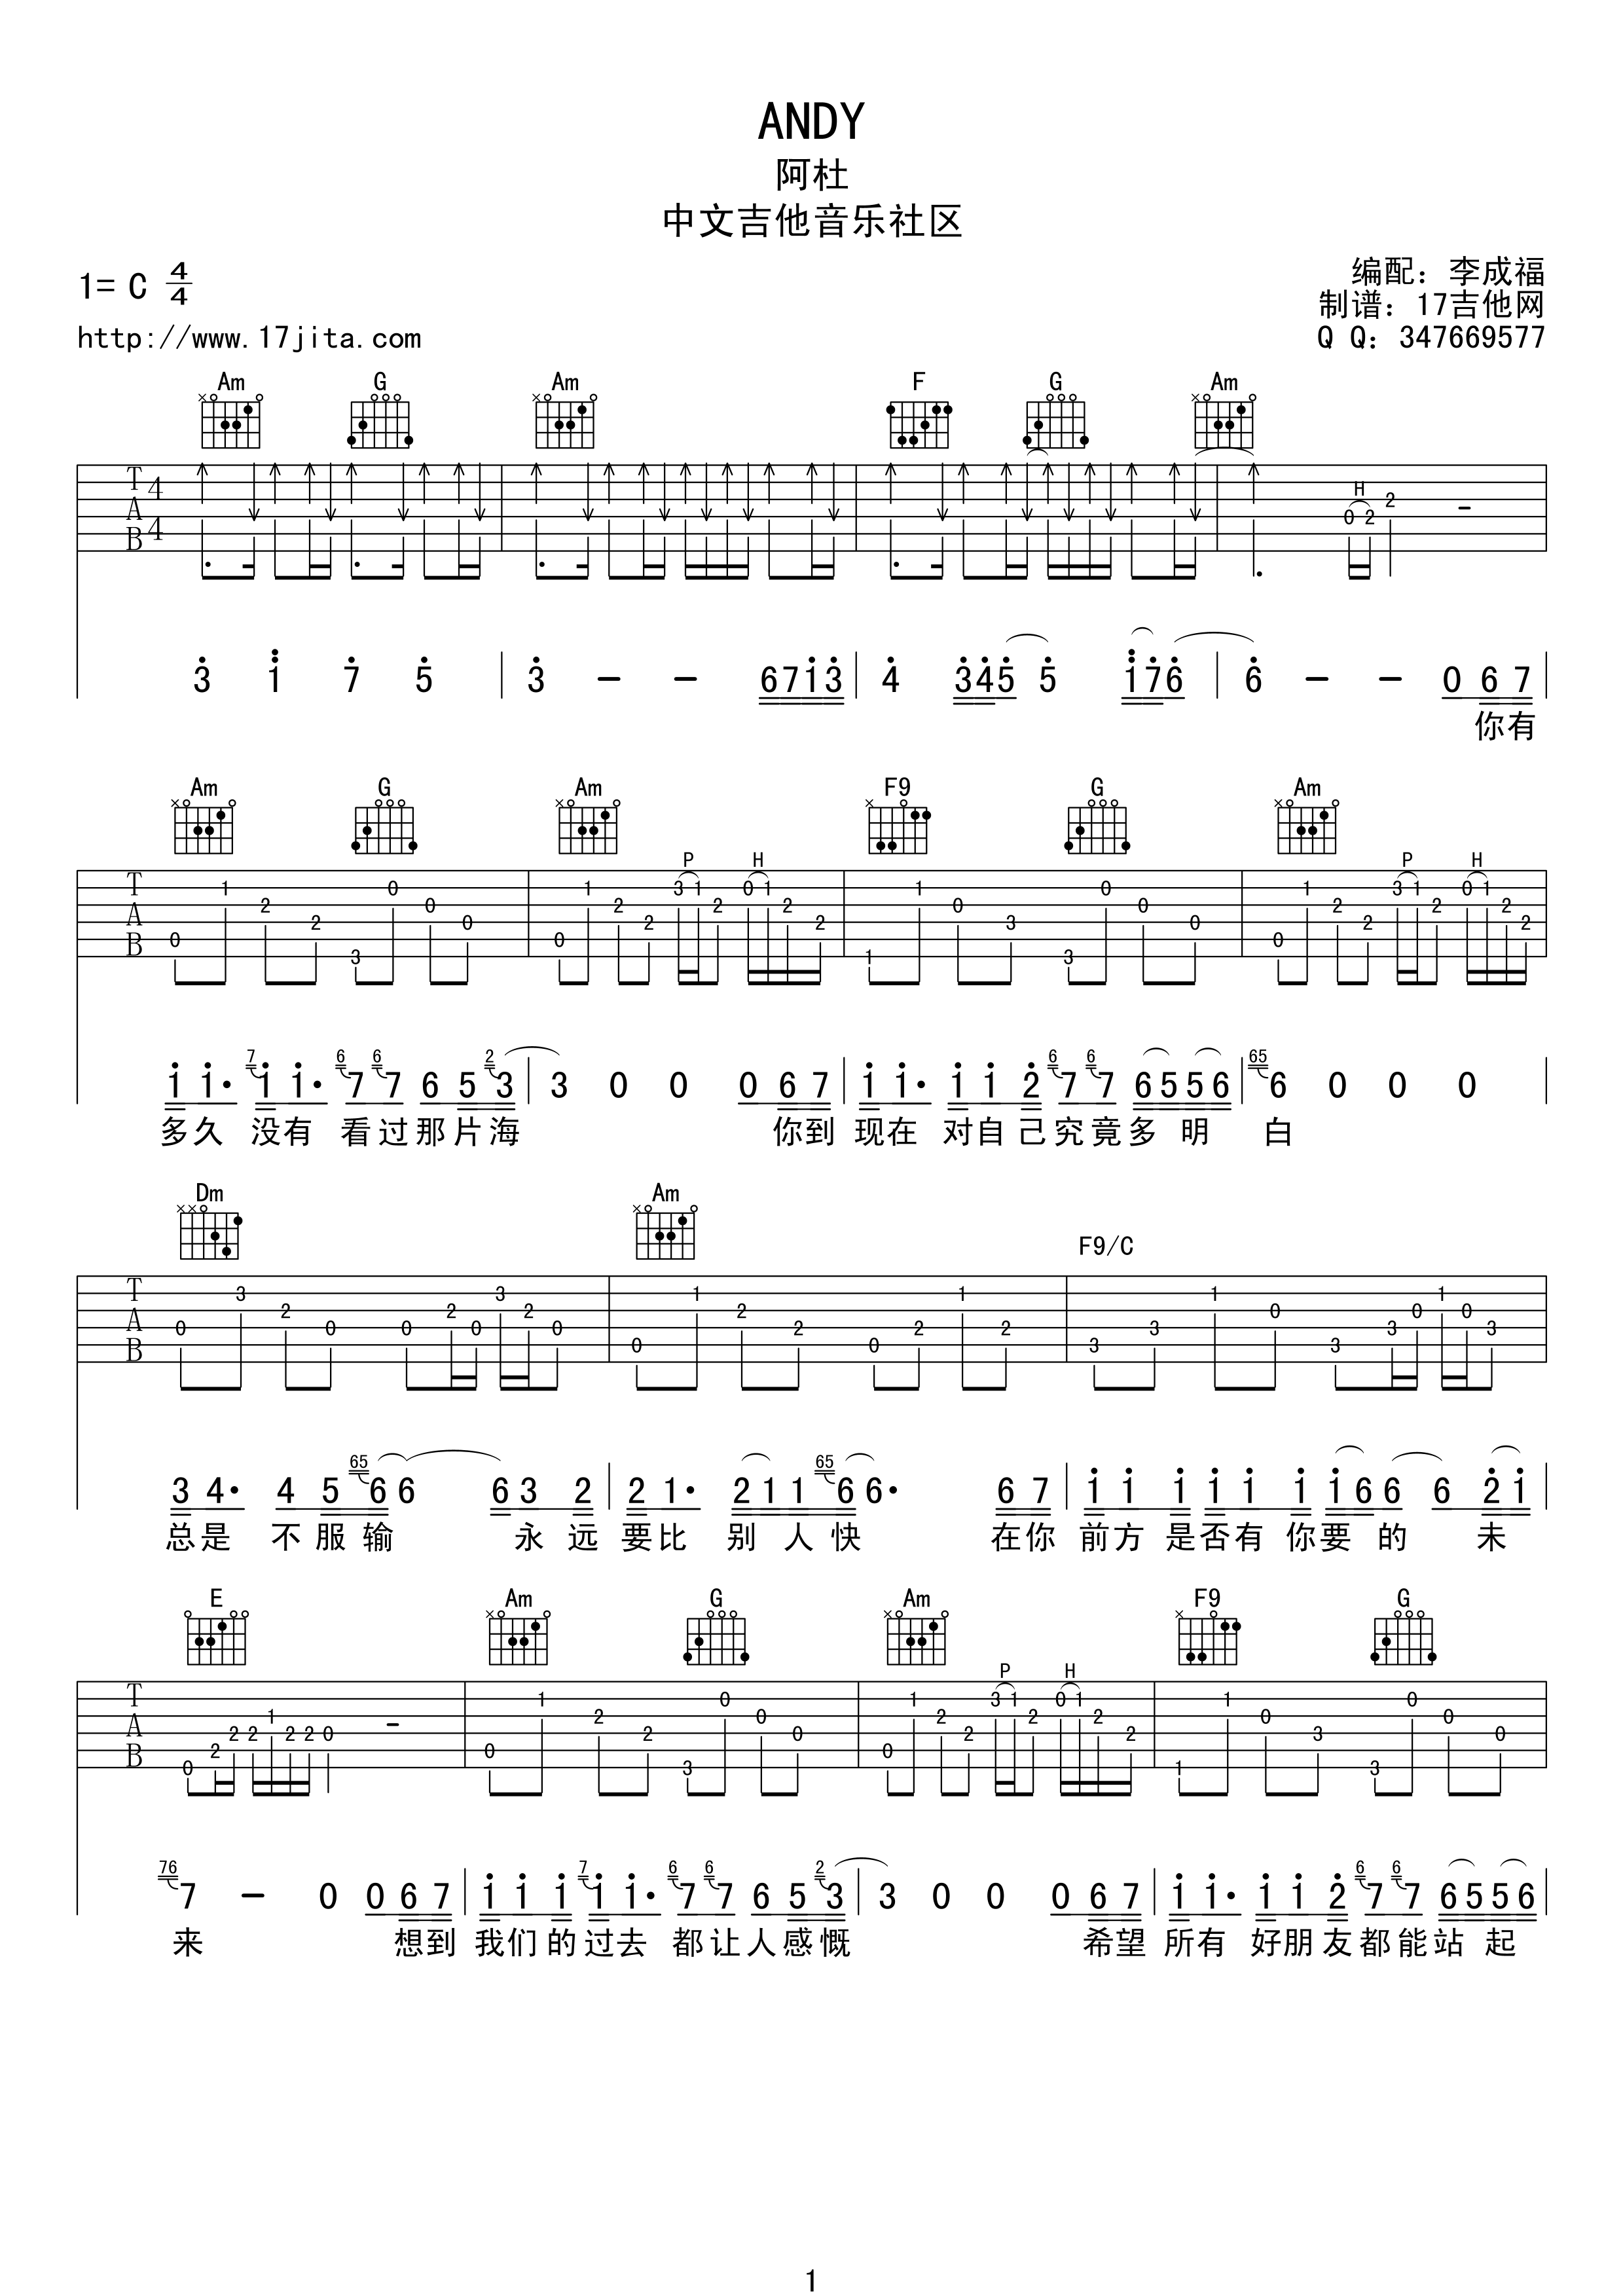 andy吉他谱 C调精选版-17吉他编配-阿杜插图